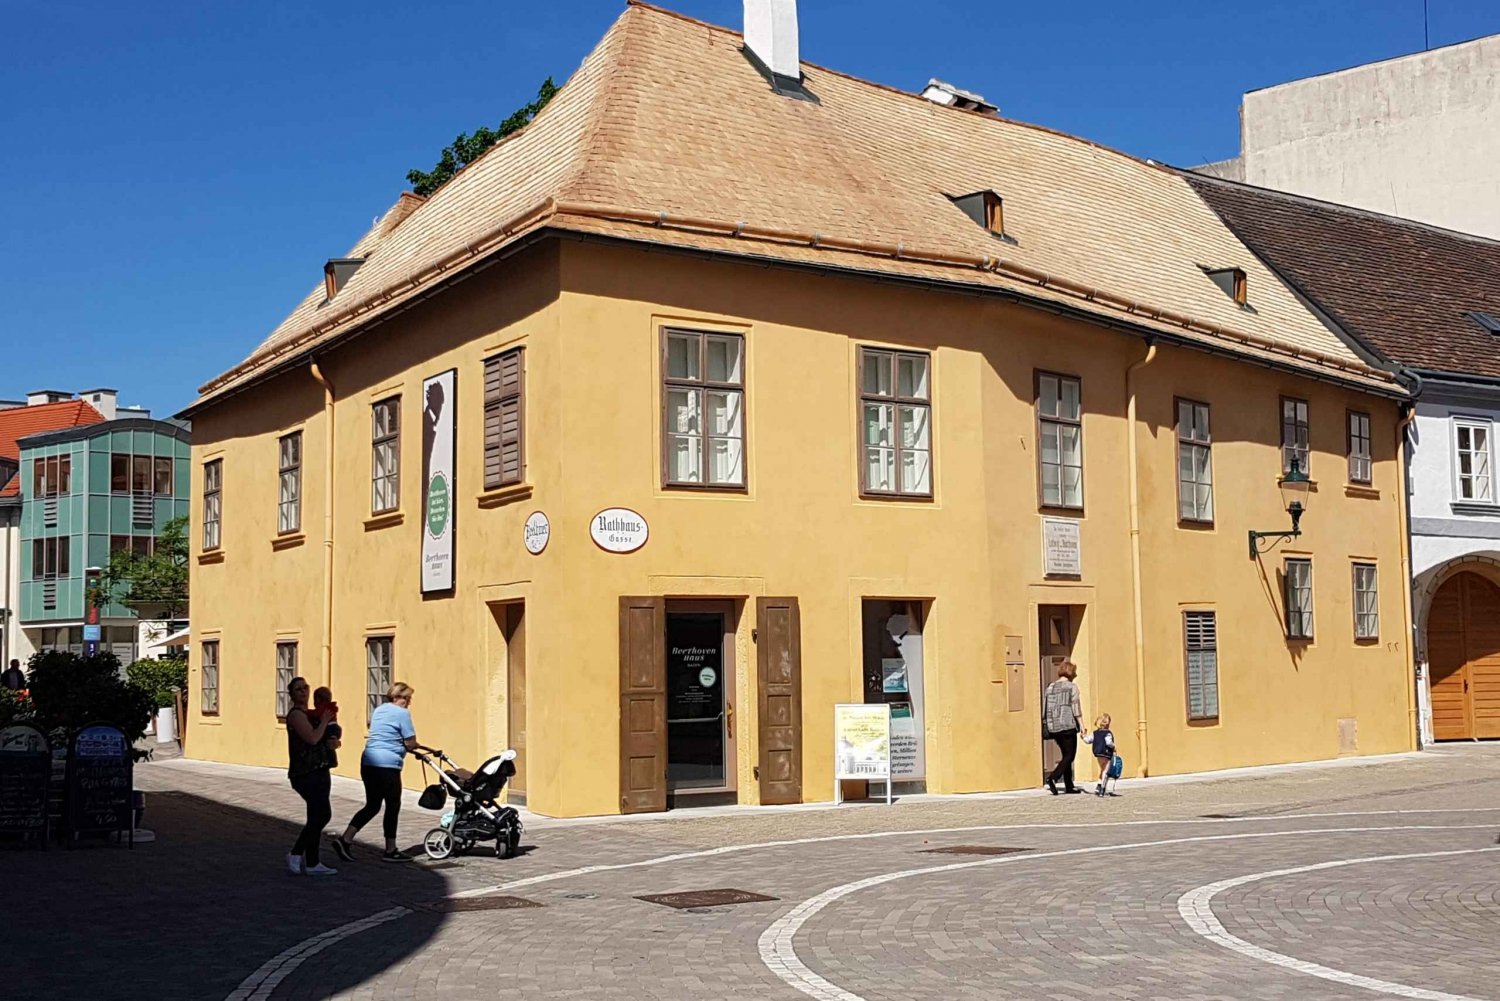 Beethovenhaus Baden, ingresso de entrada